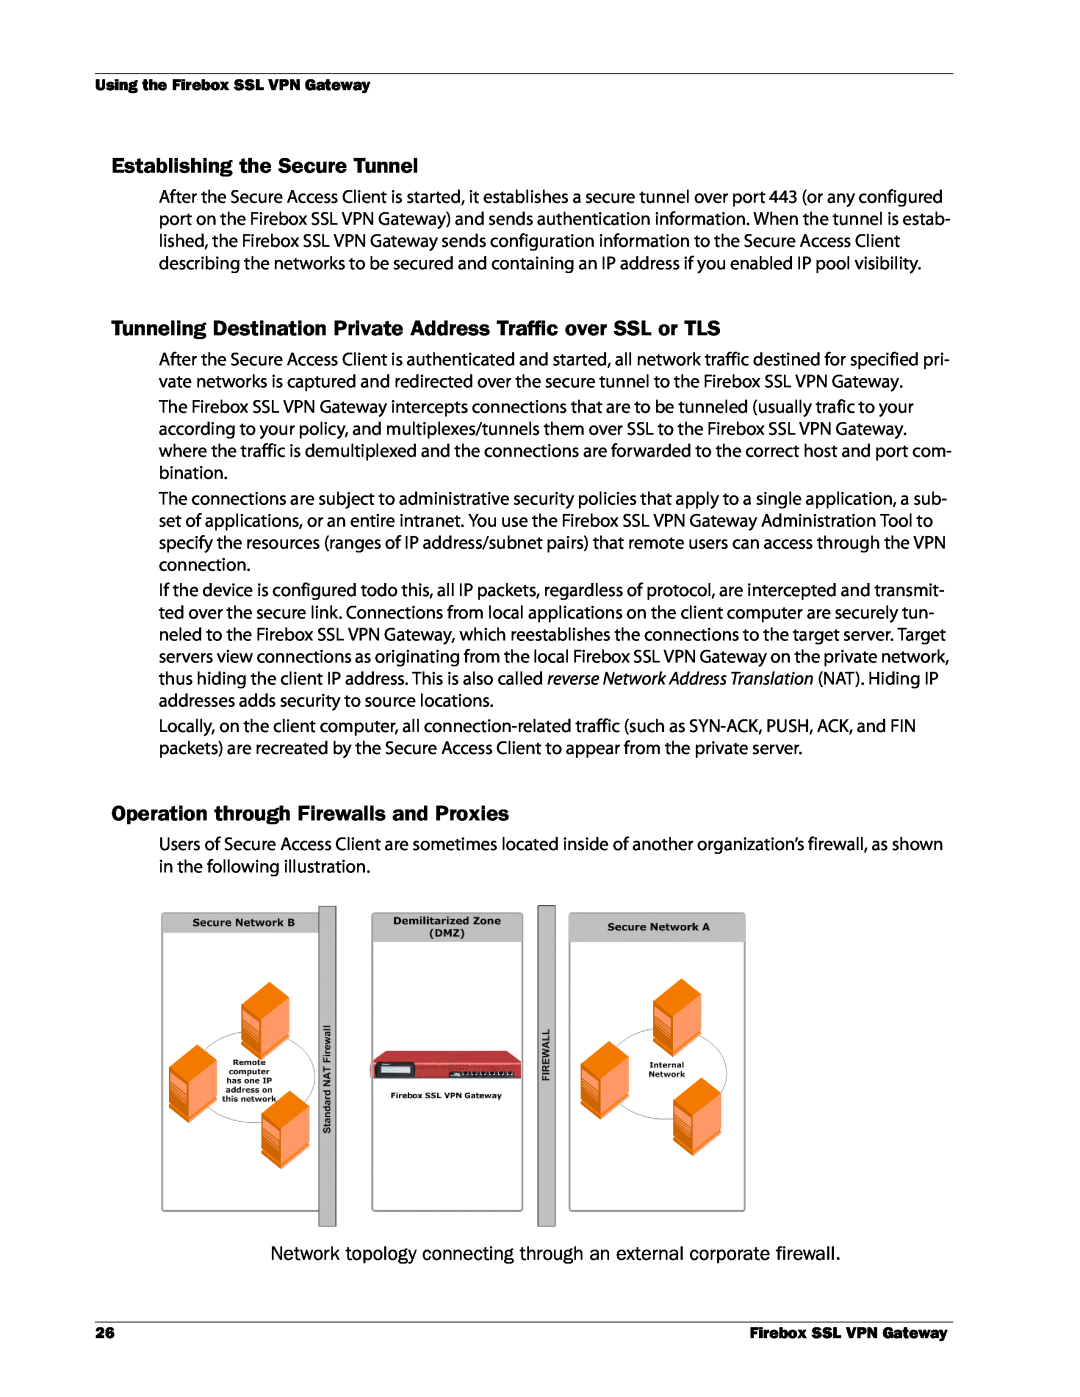 WatchGuard Technologies SSL VPN manual Establishing the Secure Tunnel, Operation through Firewalls and Proxies 